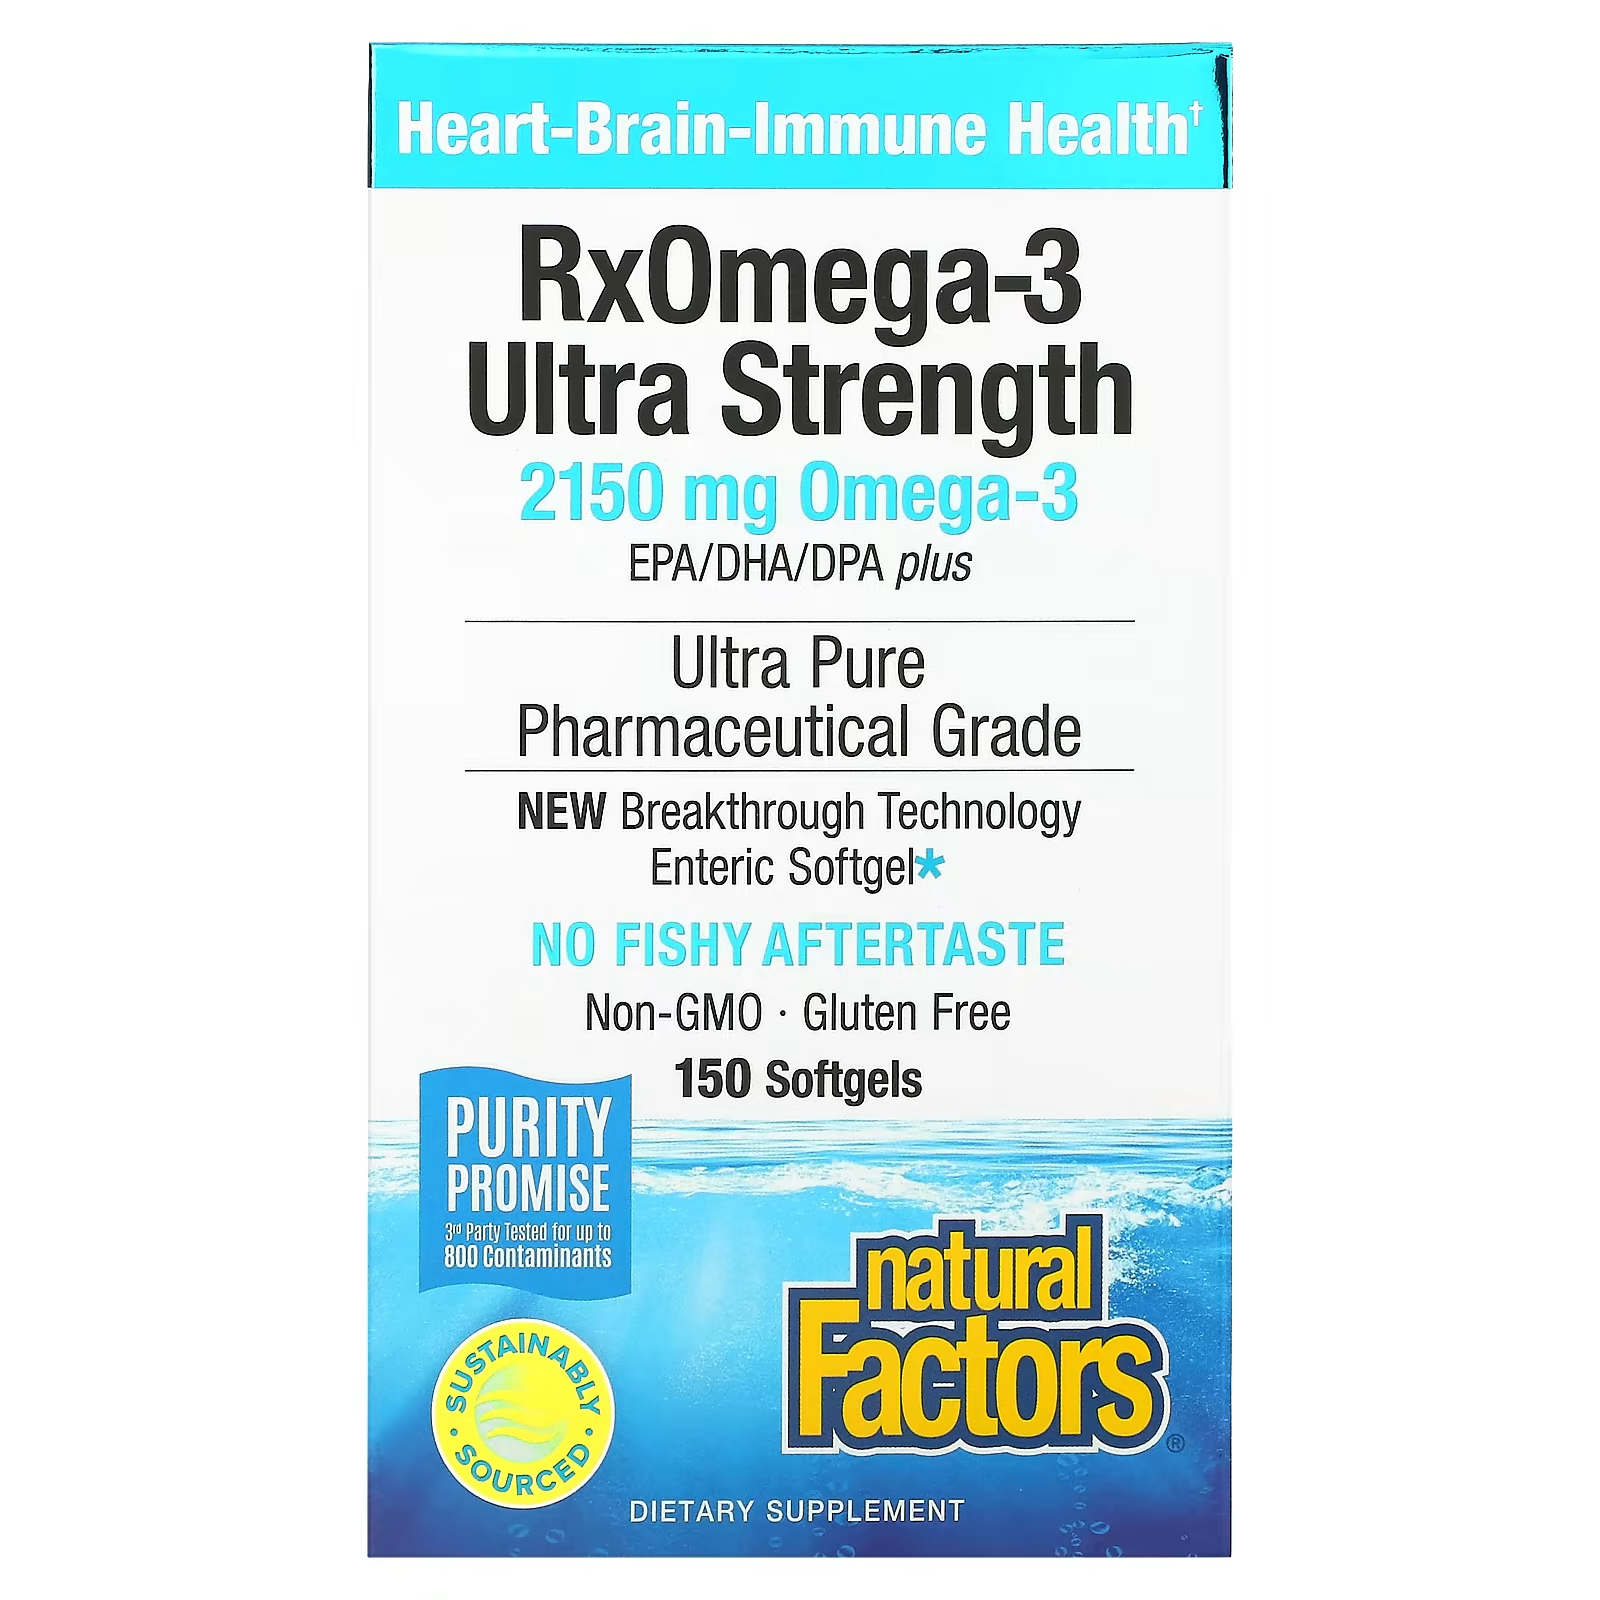 RxOmega-3 Ultra Strength 2150 мг 150 мягких таблеток (1075 мг на мягкую таблетку) Natural Factors natural factors рыбий жир с максимальной силой действия rxomega 3 для приема один раз в день 900 мг 60 капсул enteripure